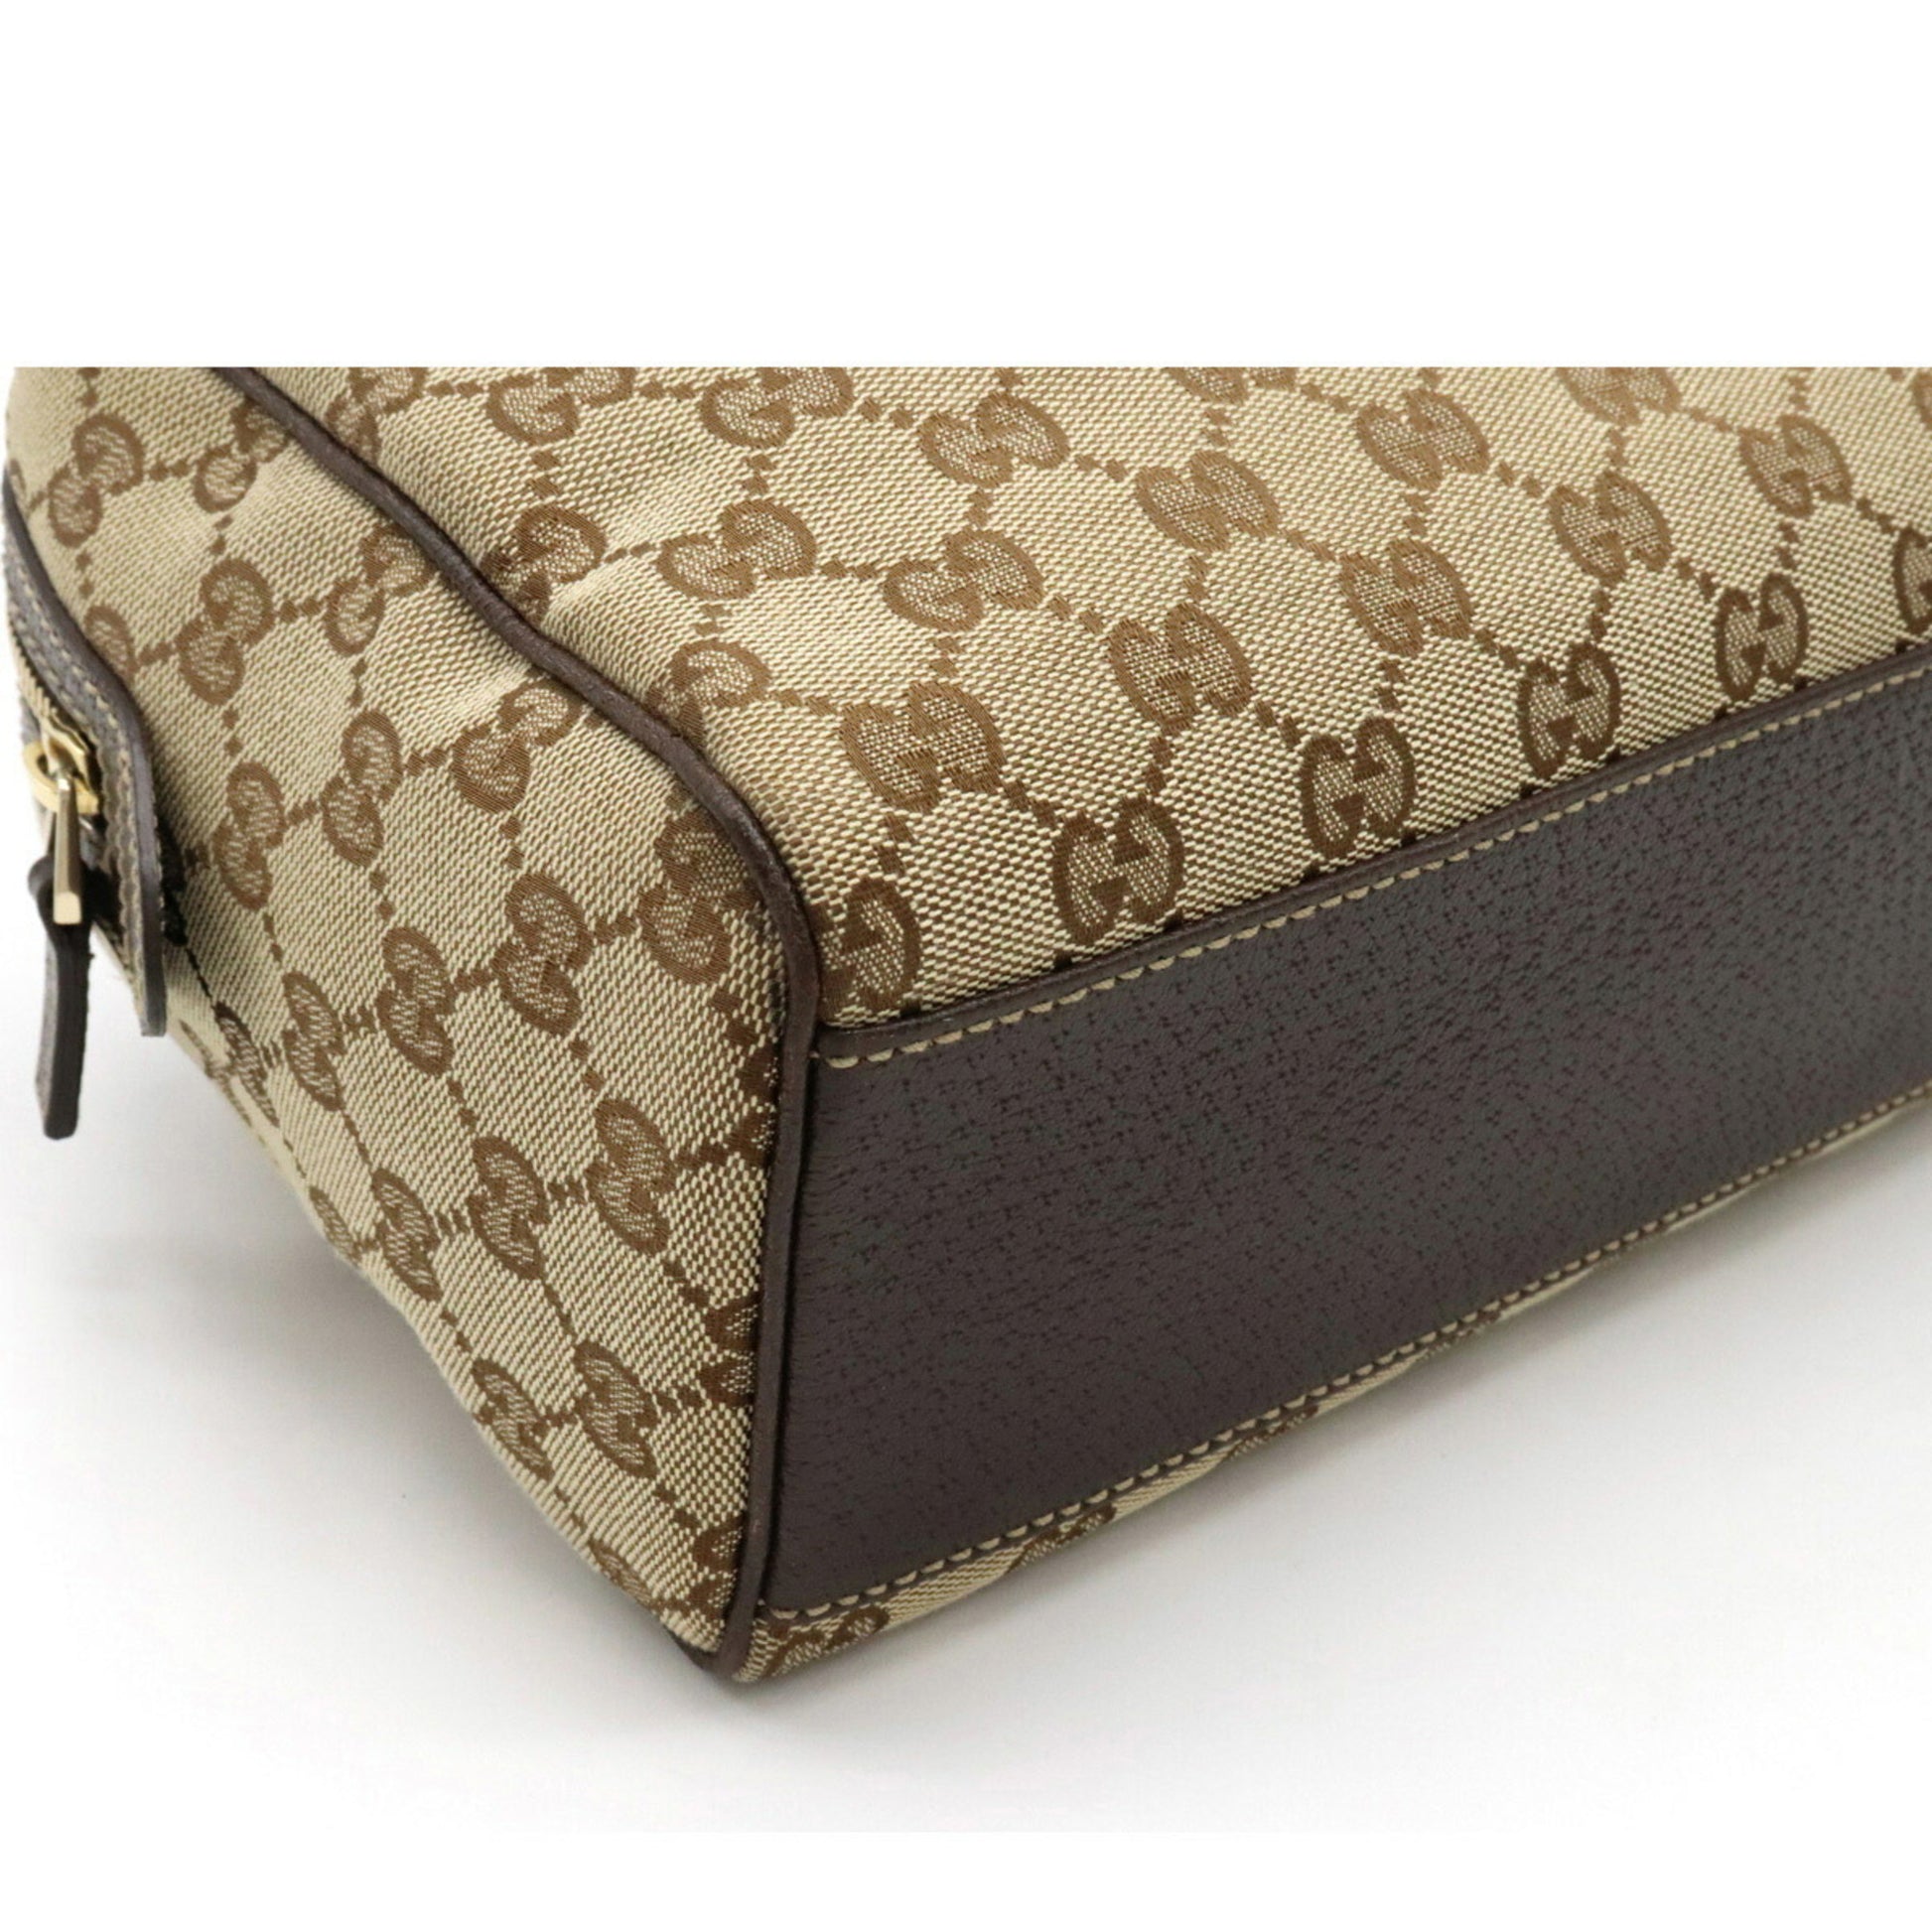 Gucci GG Canvas Handbag Shoulder Bag Leather Beige Brown 15 centenariocat.upeu.edu.pe